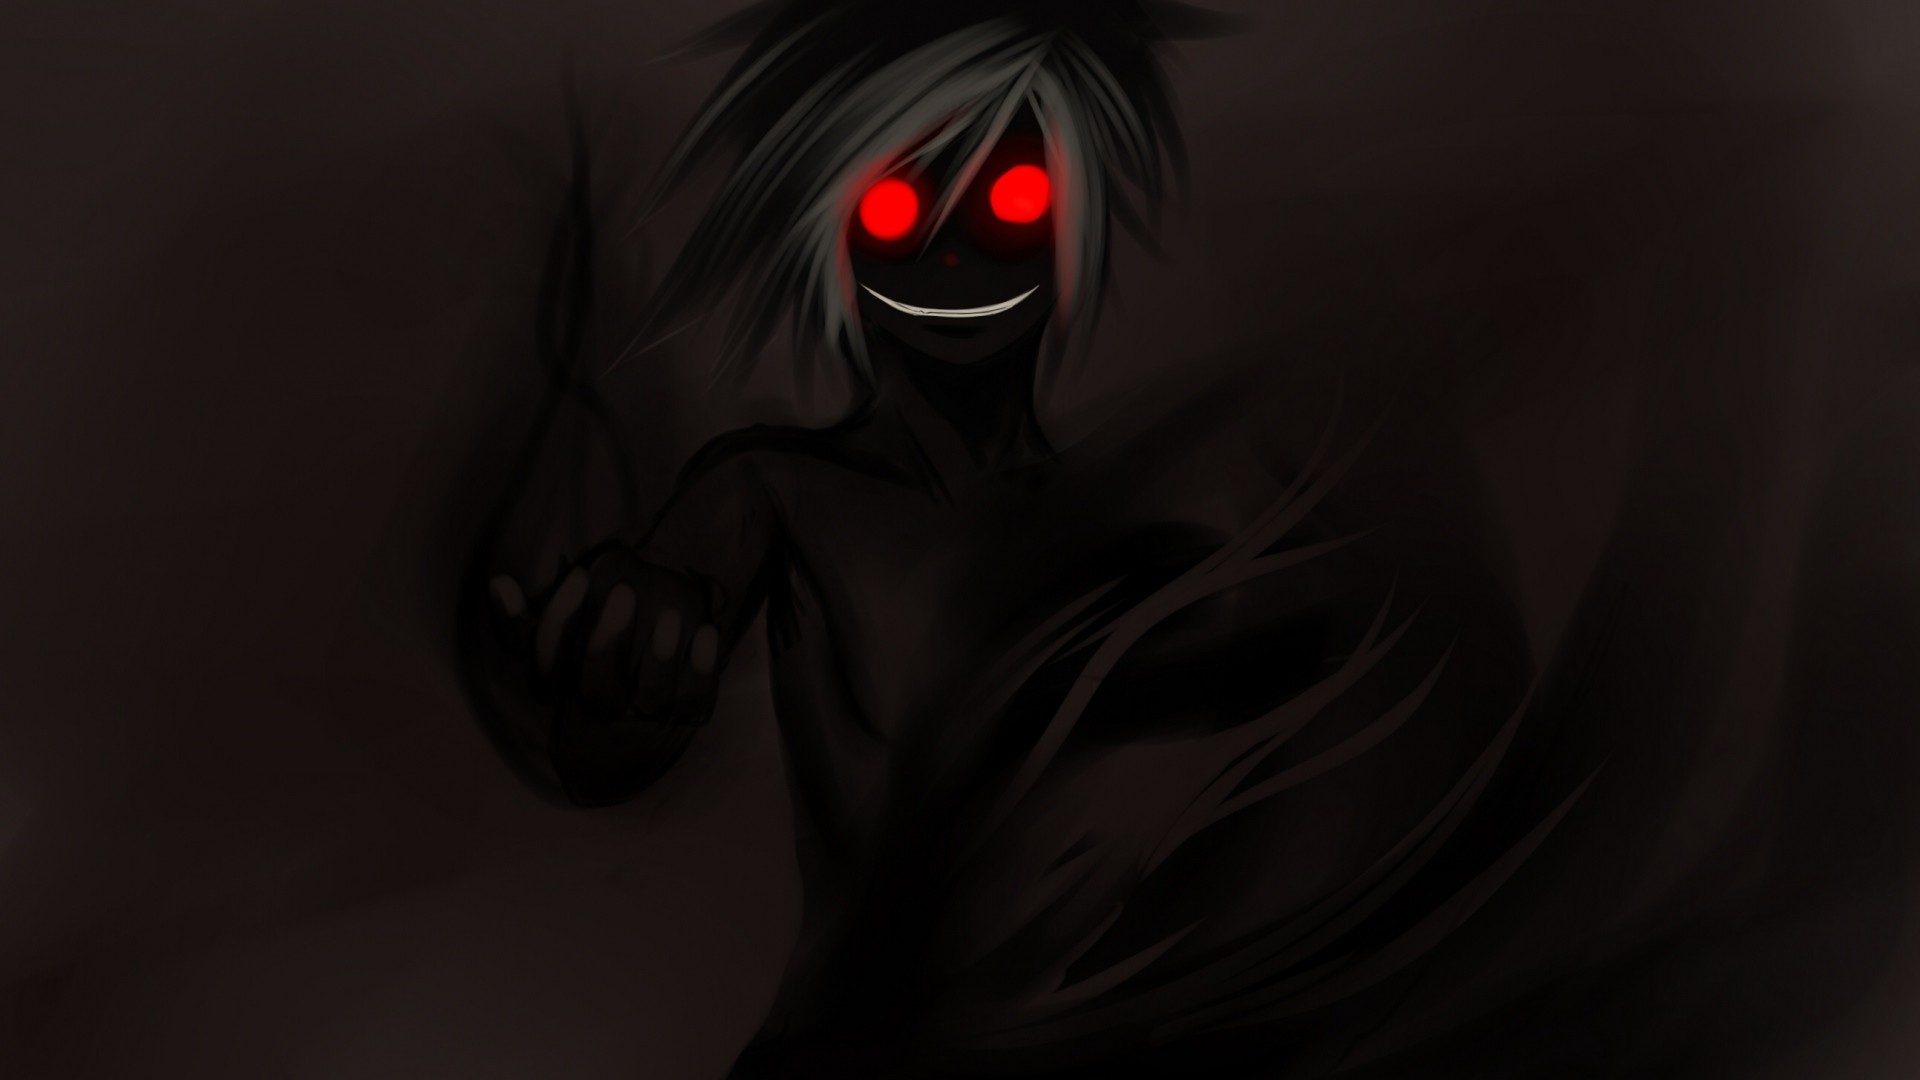 Anime 1920x1080 ghost anime red eyes dark black background spooky glowing eyes smiling